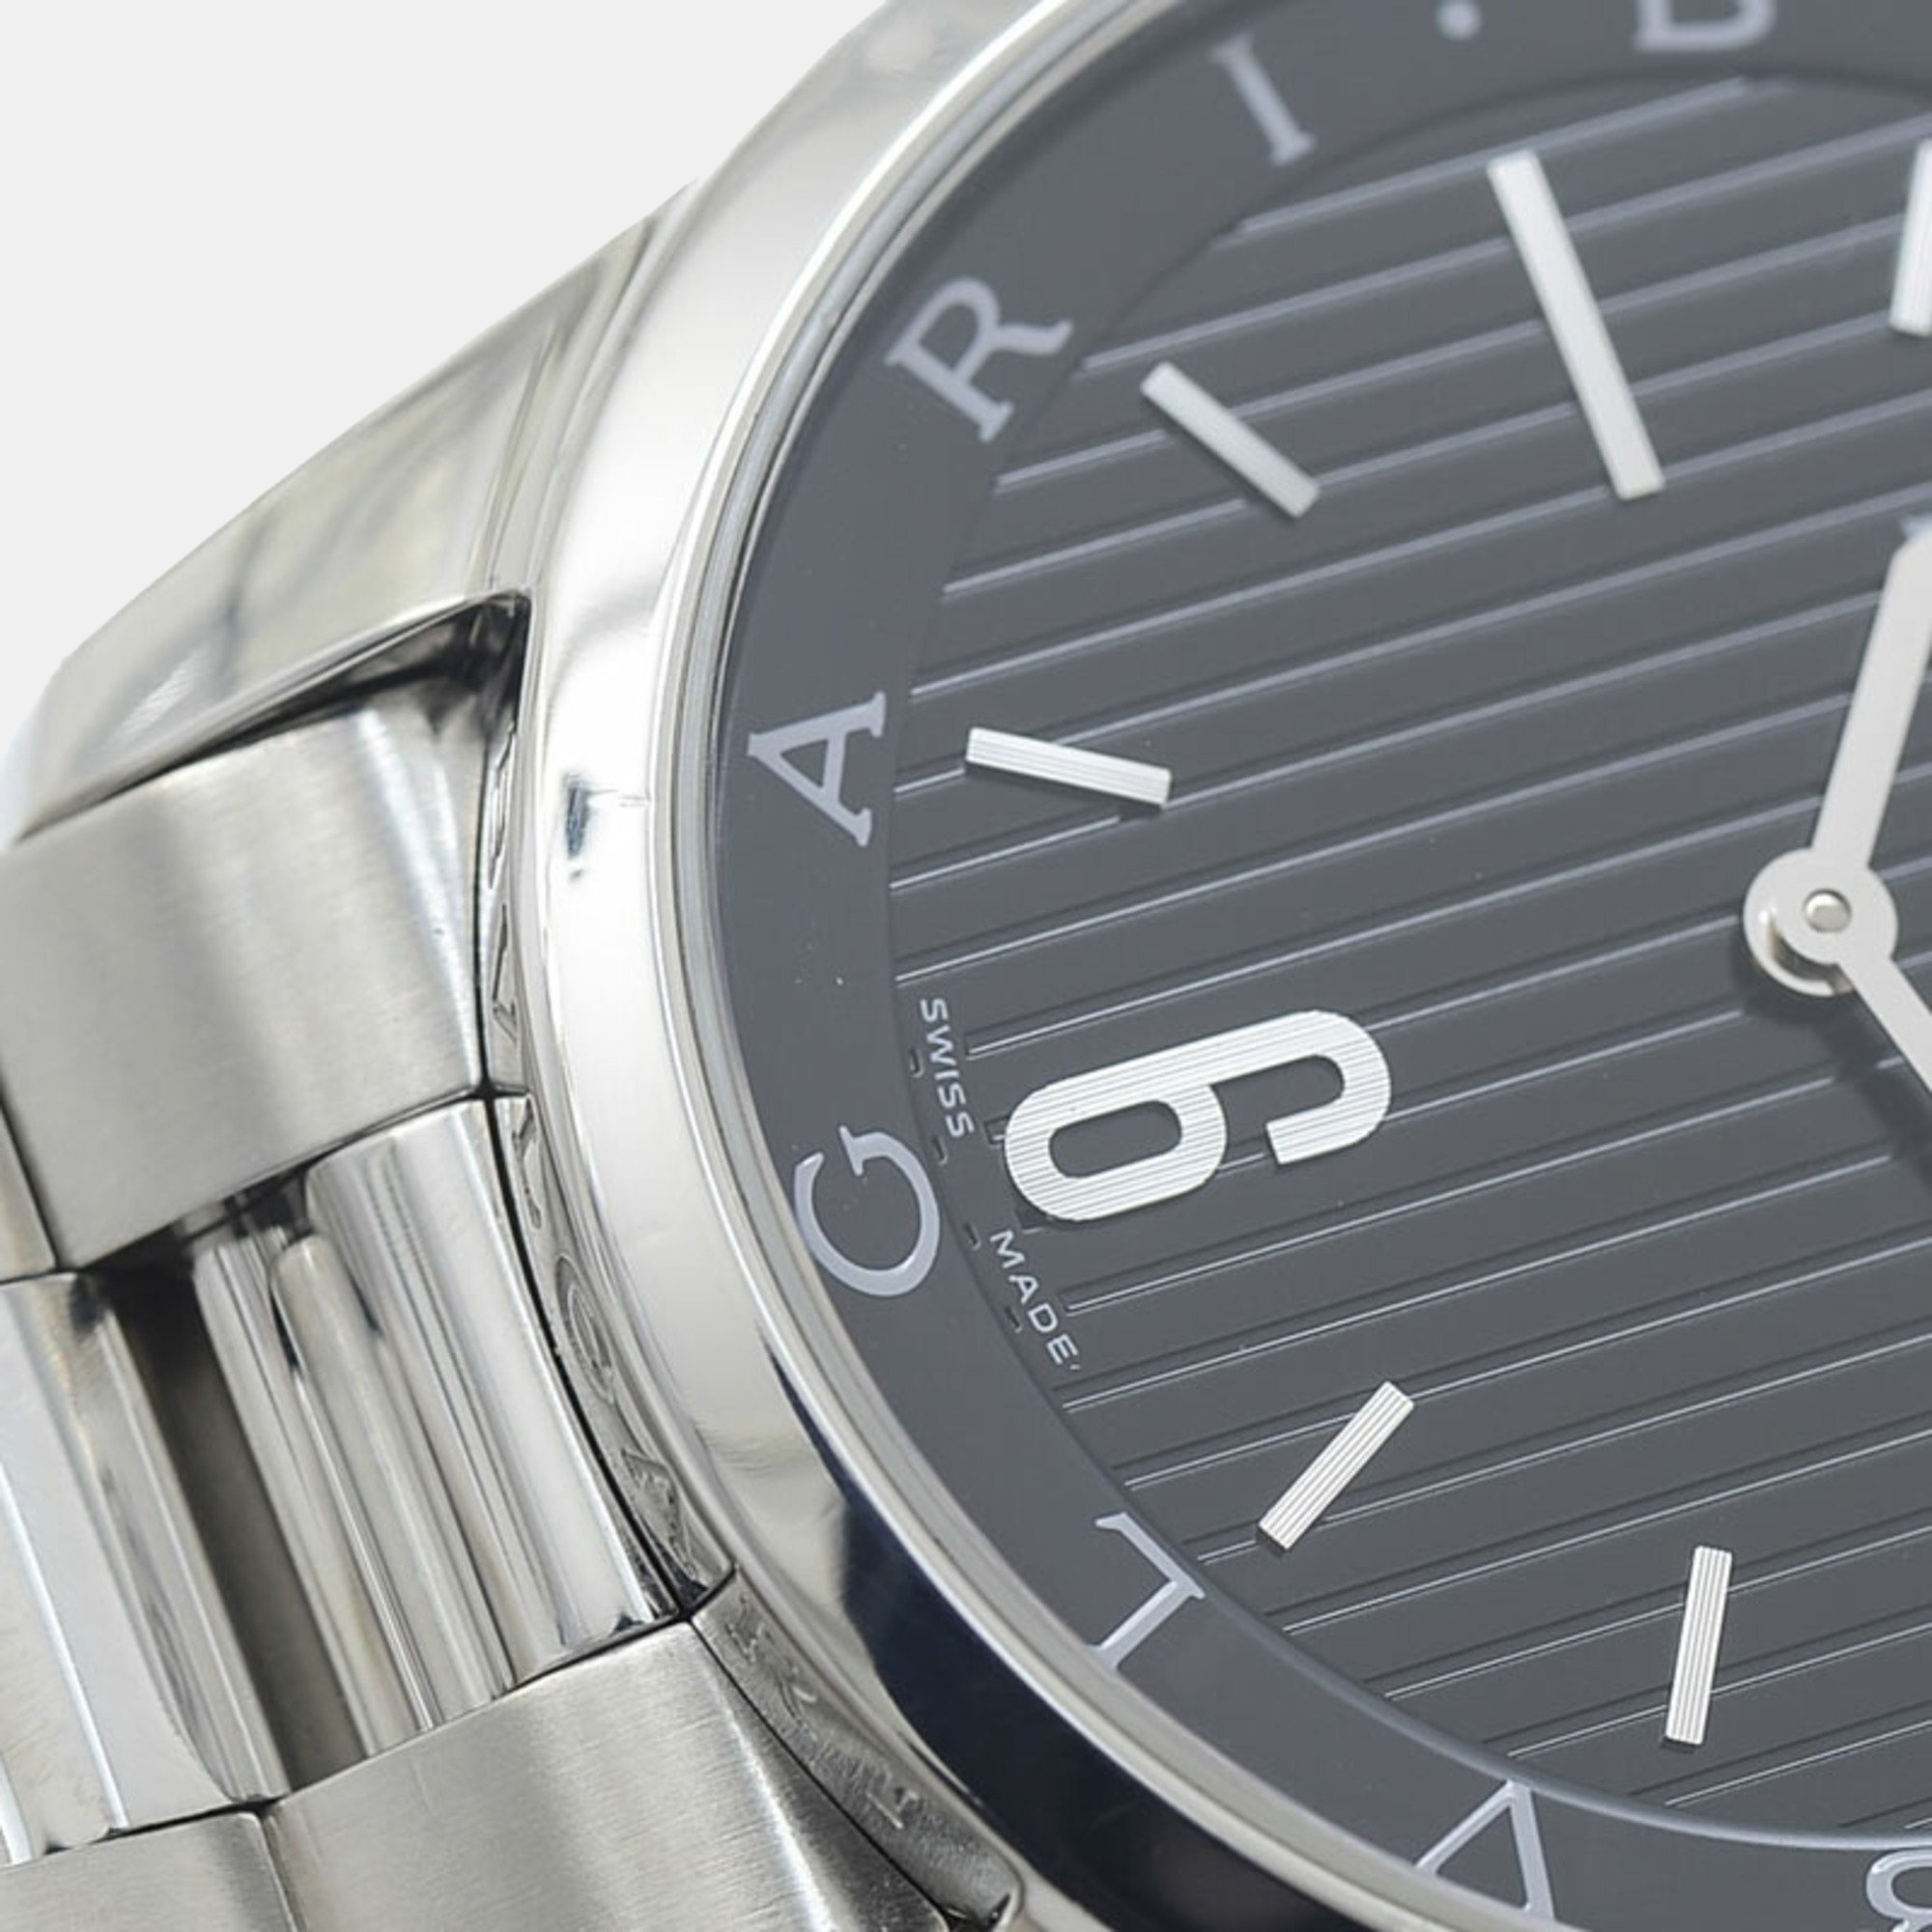 Bvlgari Black Stainless Steel Solotempo ST37S Quartz Men's Wristwatch 37 Mm